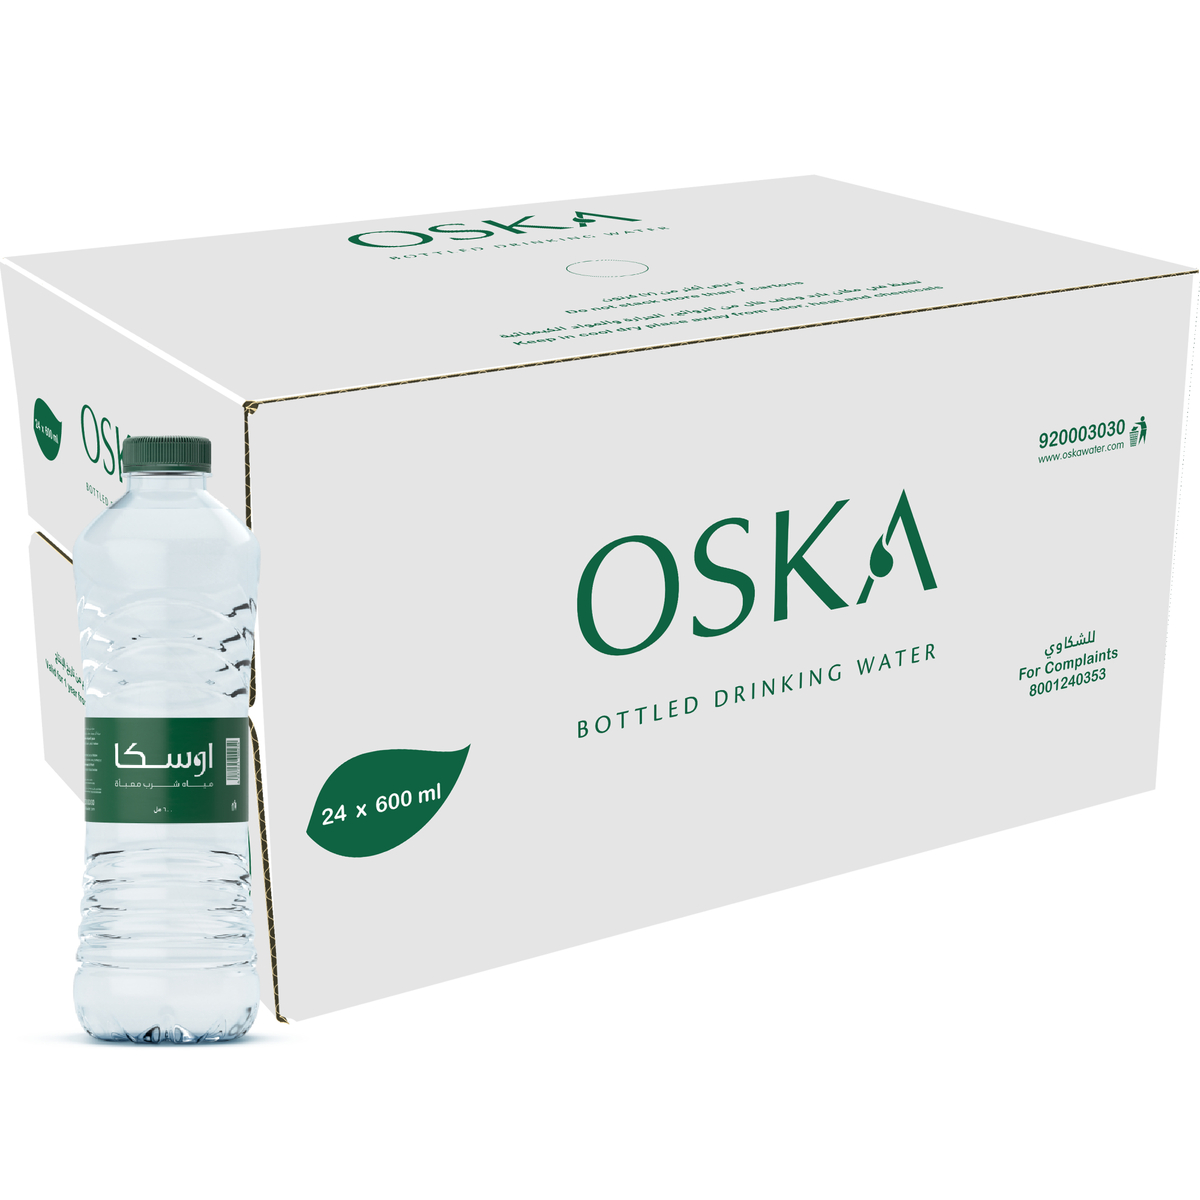 Oska Bottled Drinking Water 24 x 600ml